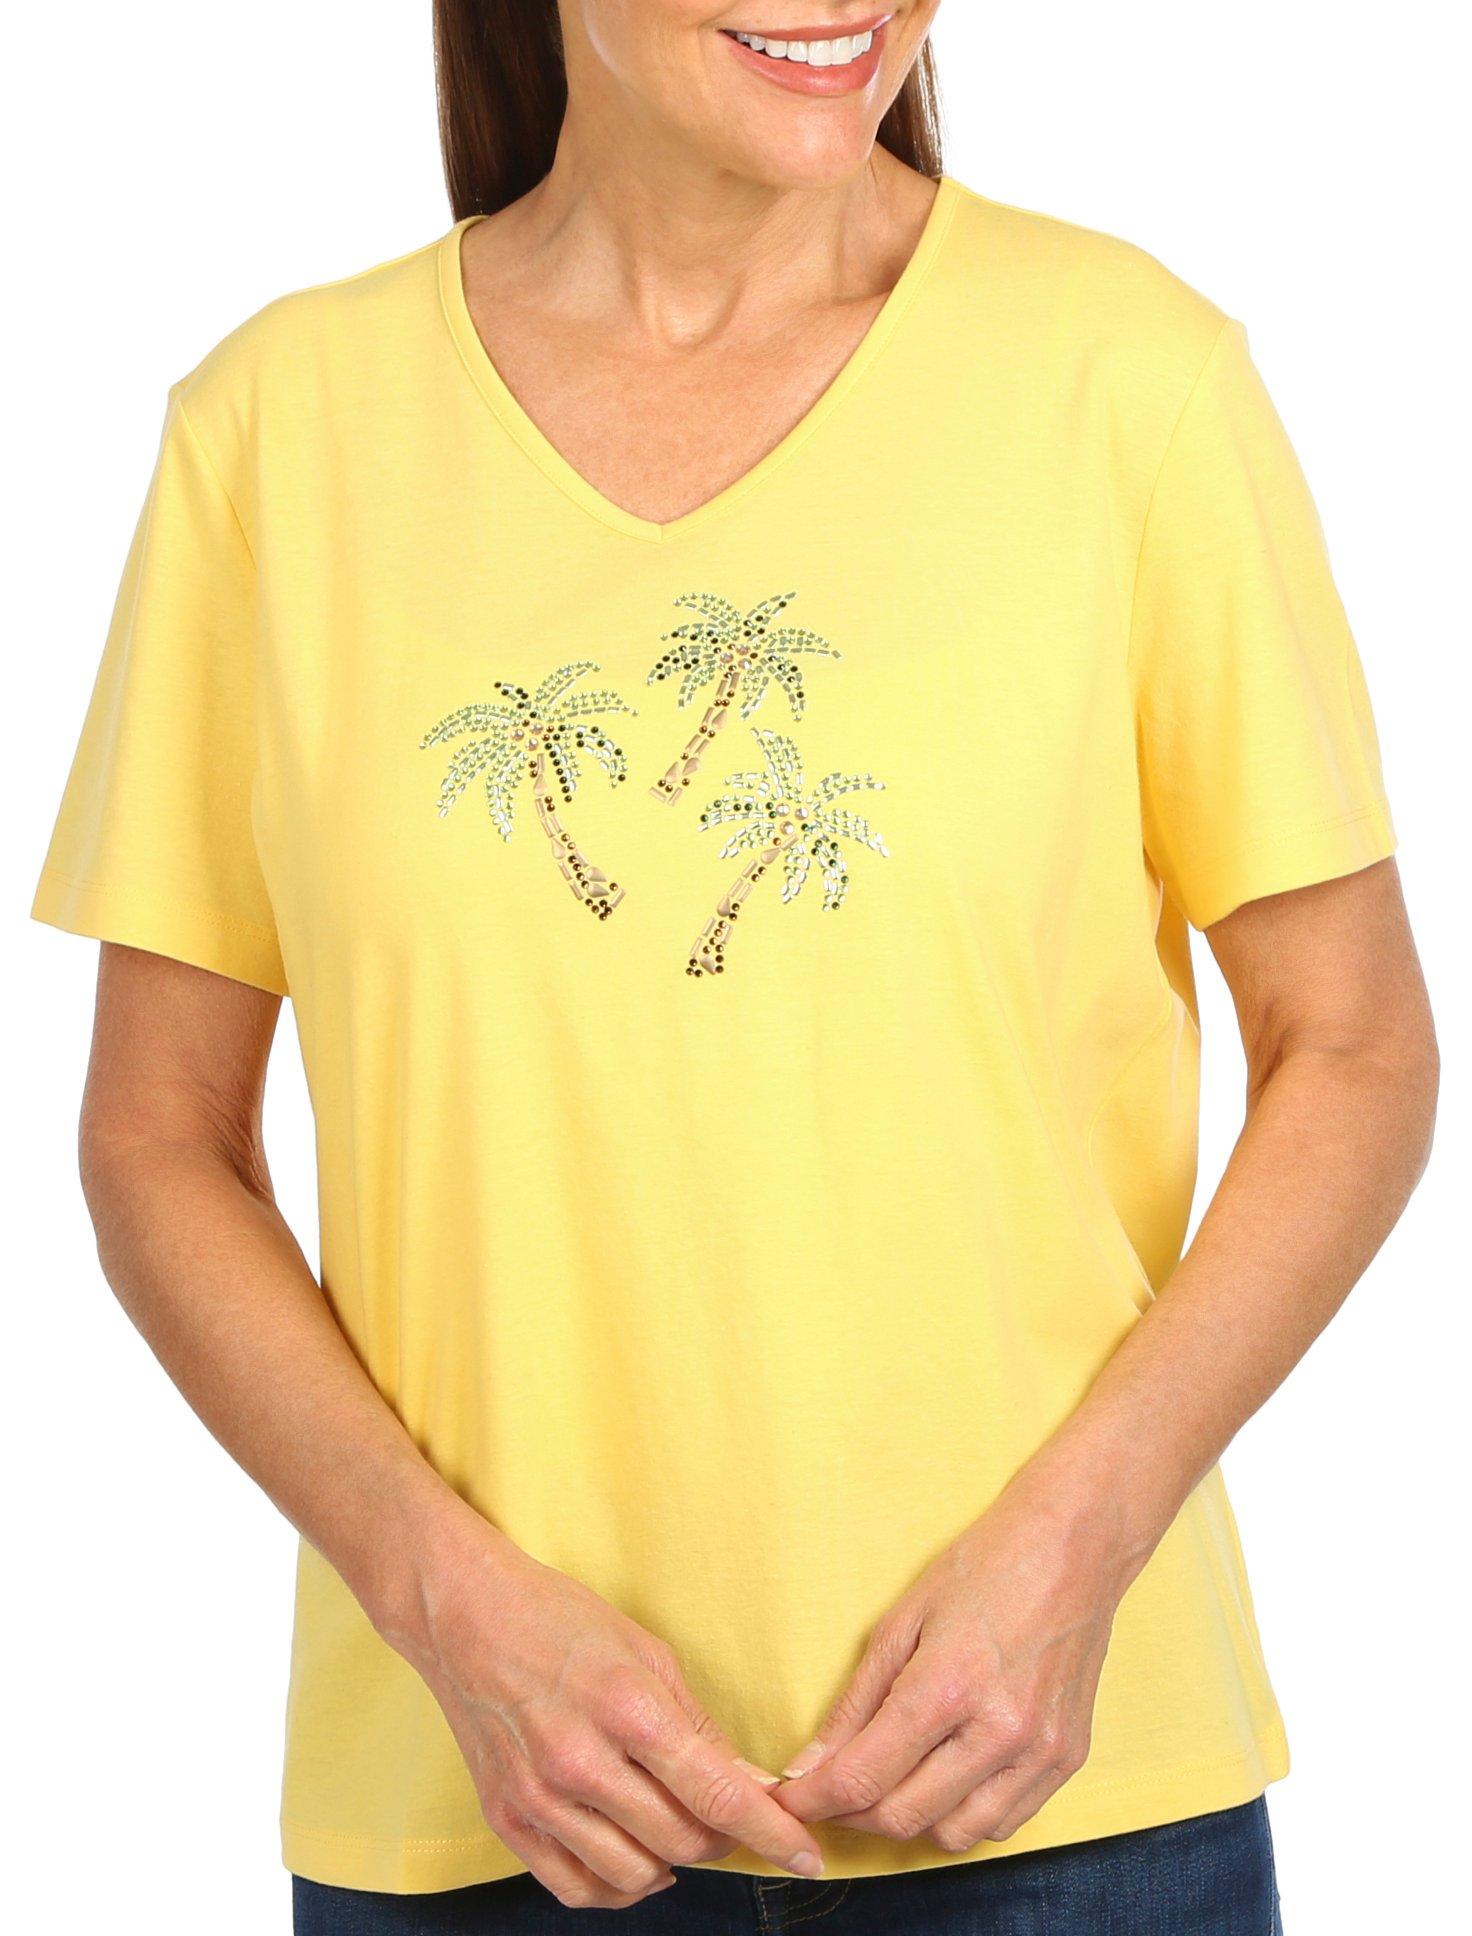 Coral Bay Petite Jewel Palms Short Sleeve Top